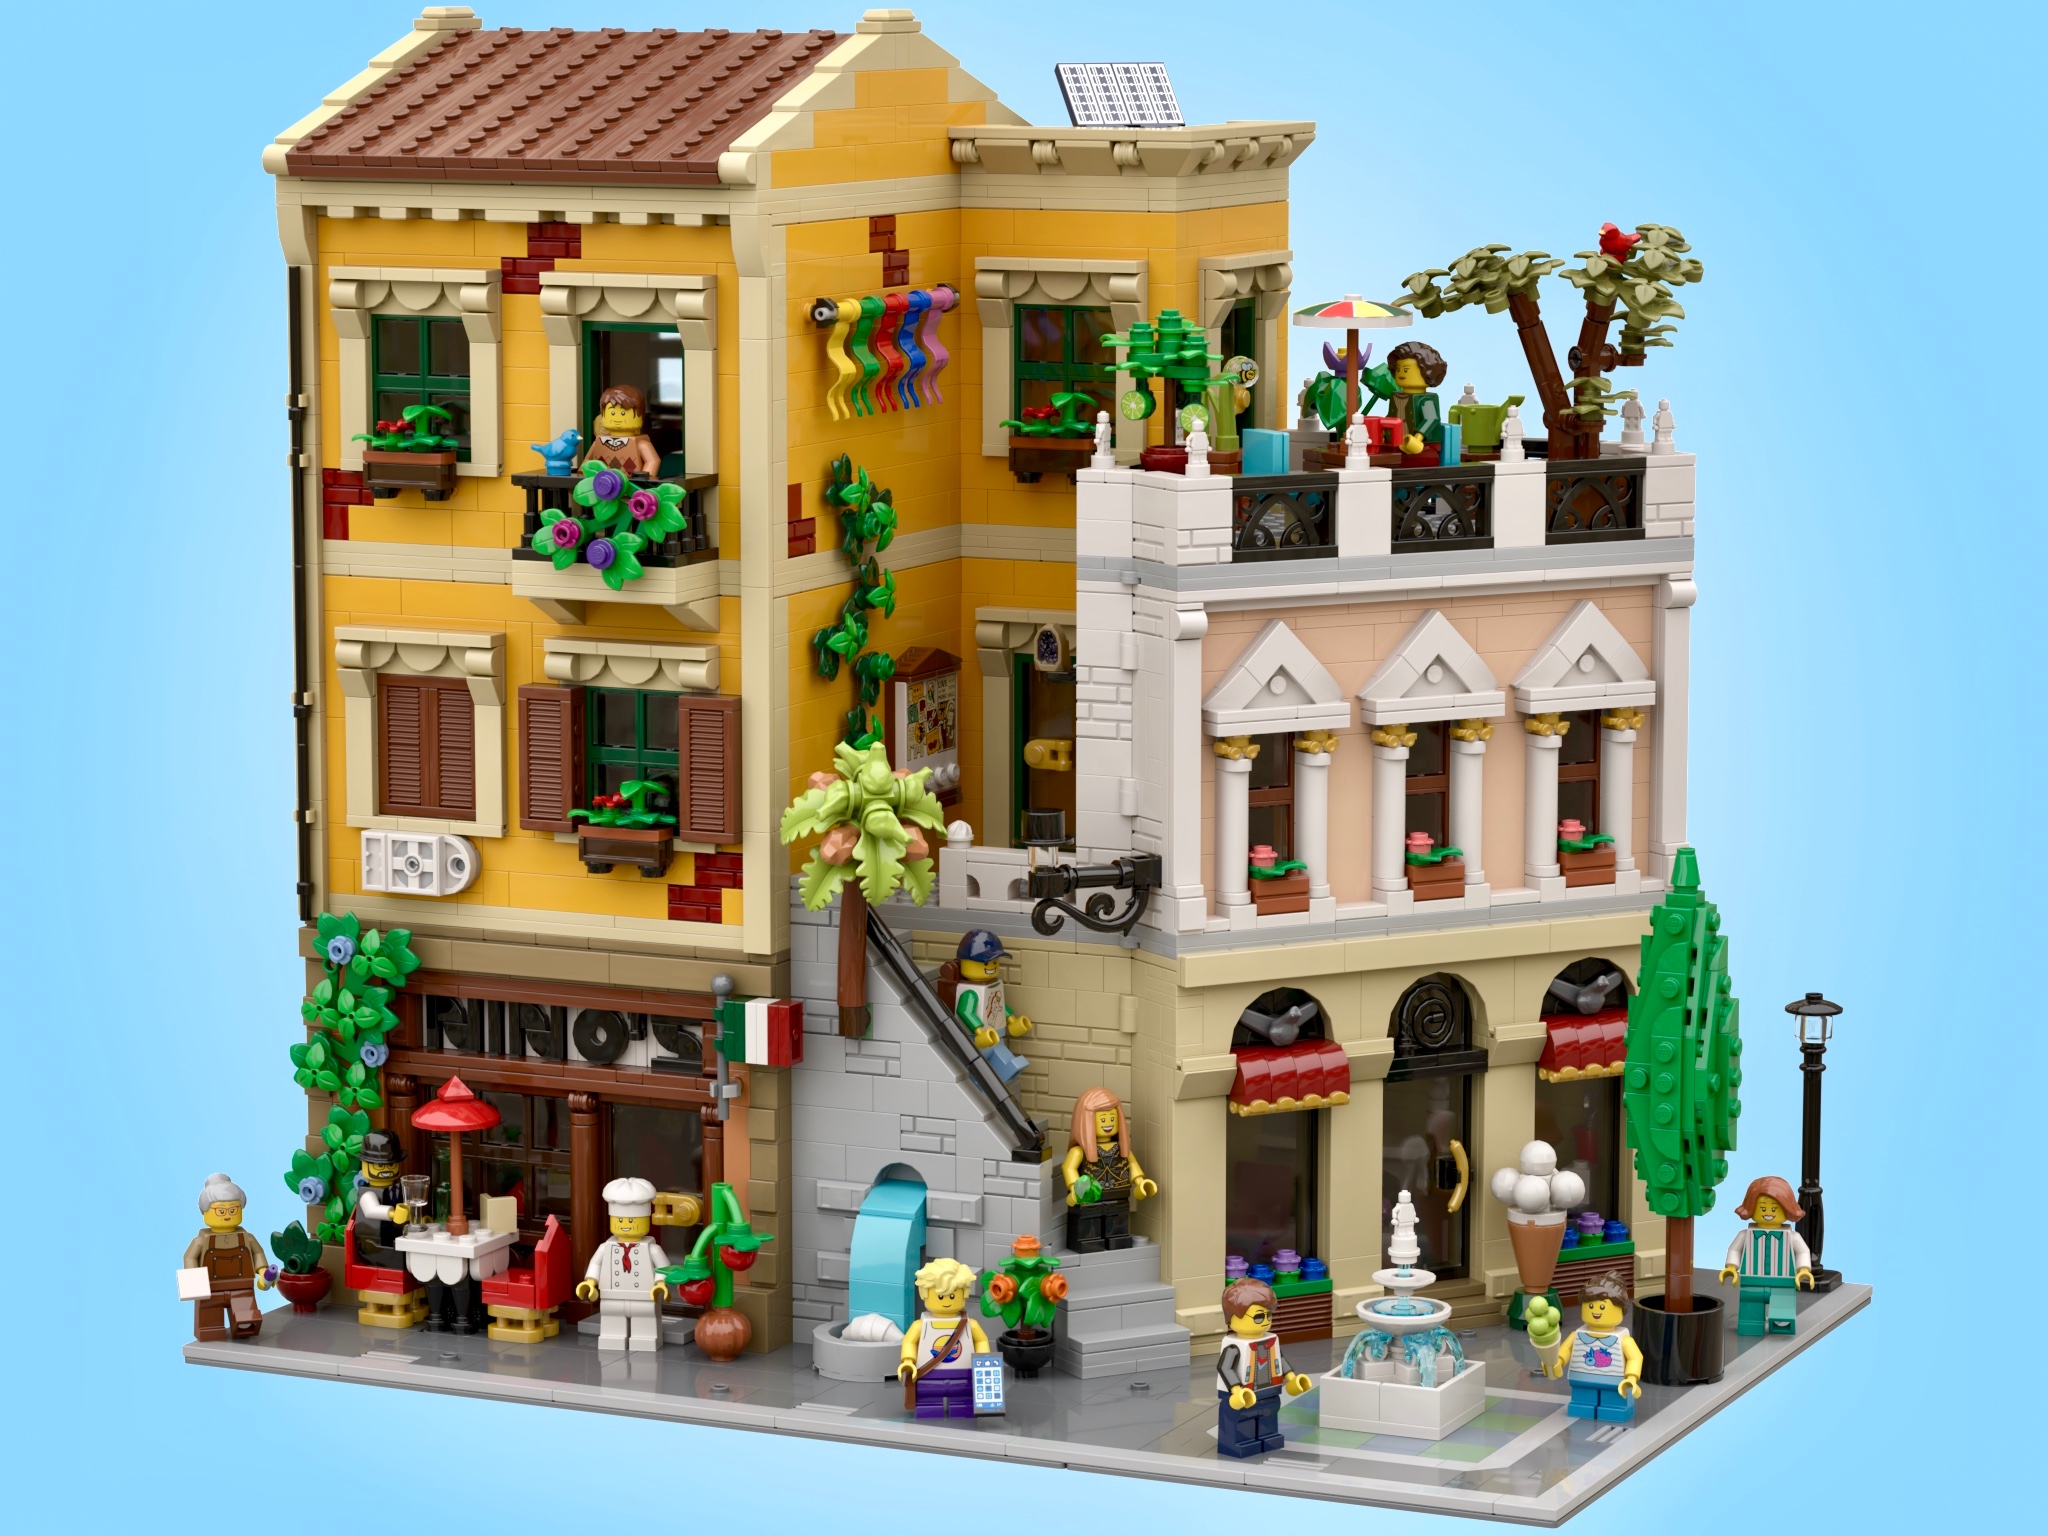 LEGO Bricklink Designer Program Italian Street Corner